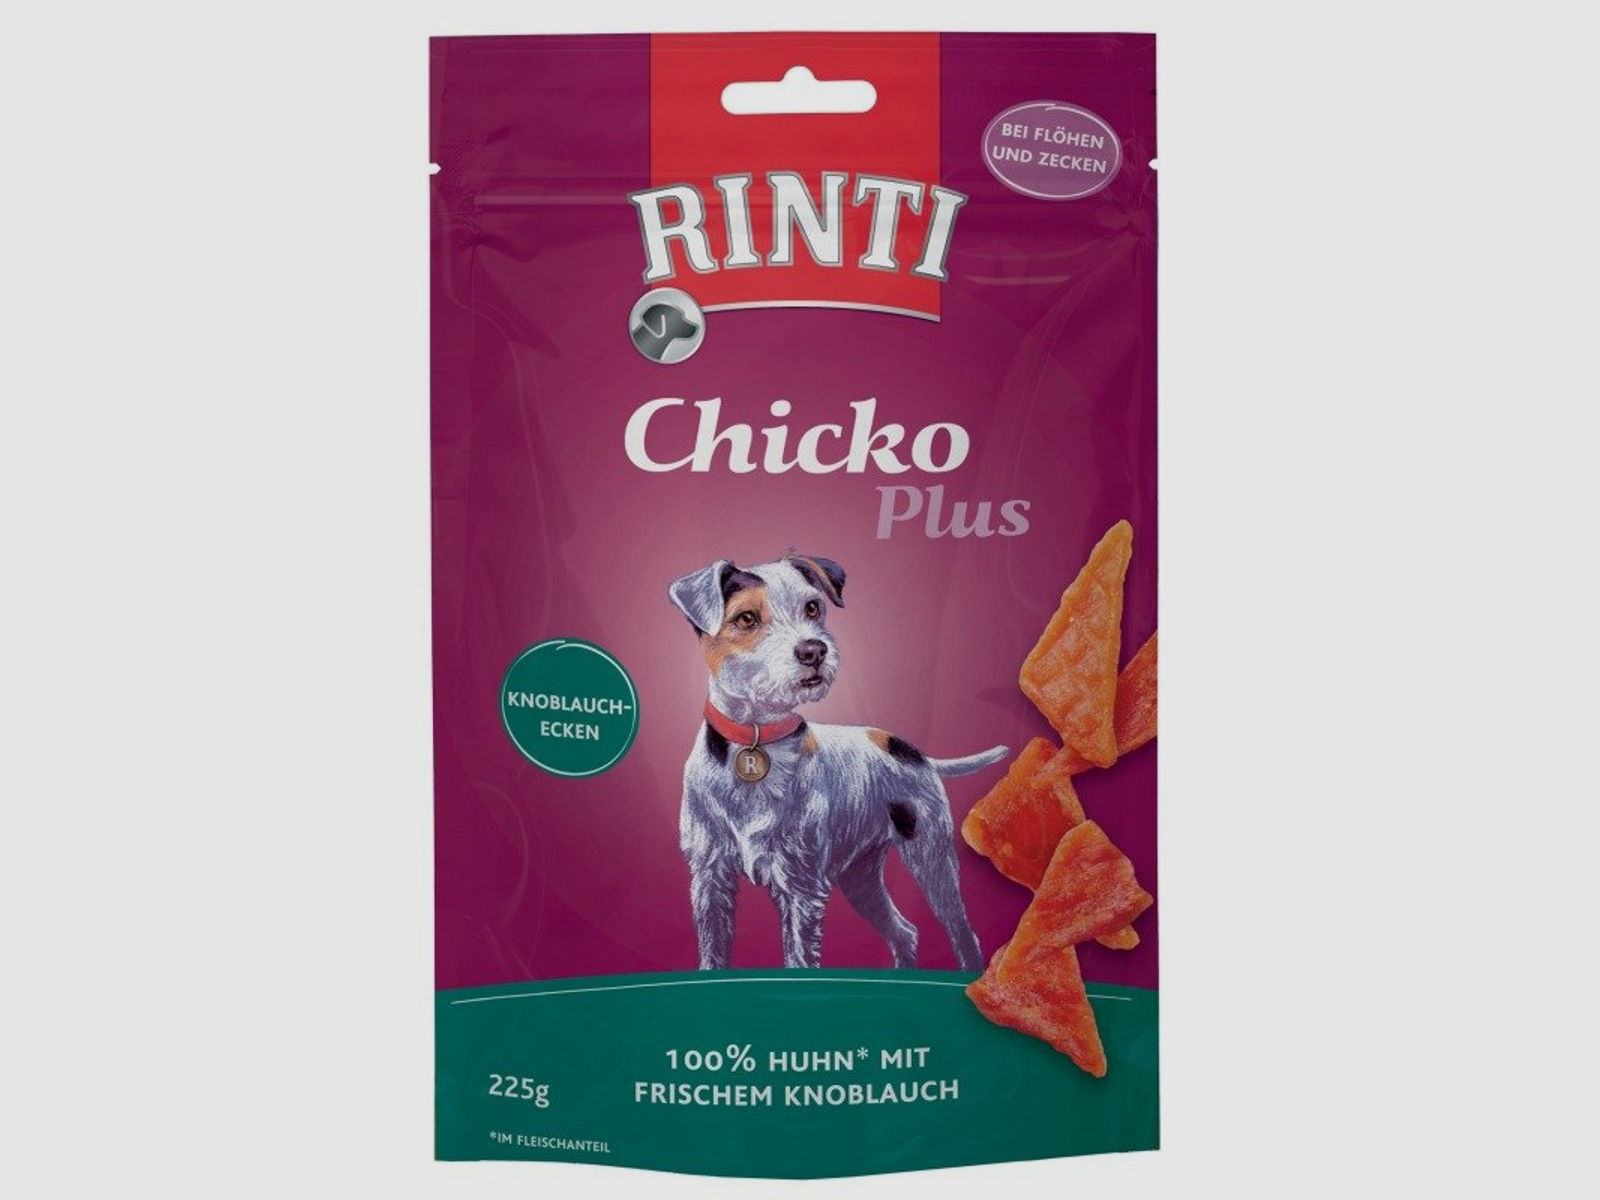 Rinti Hunde Snacks Beutel Chicko Plus 225g Knoblauchecken